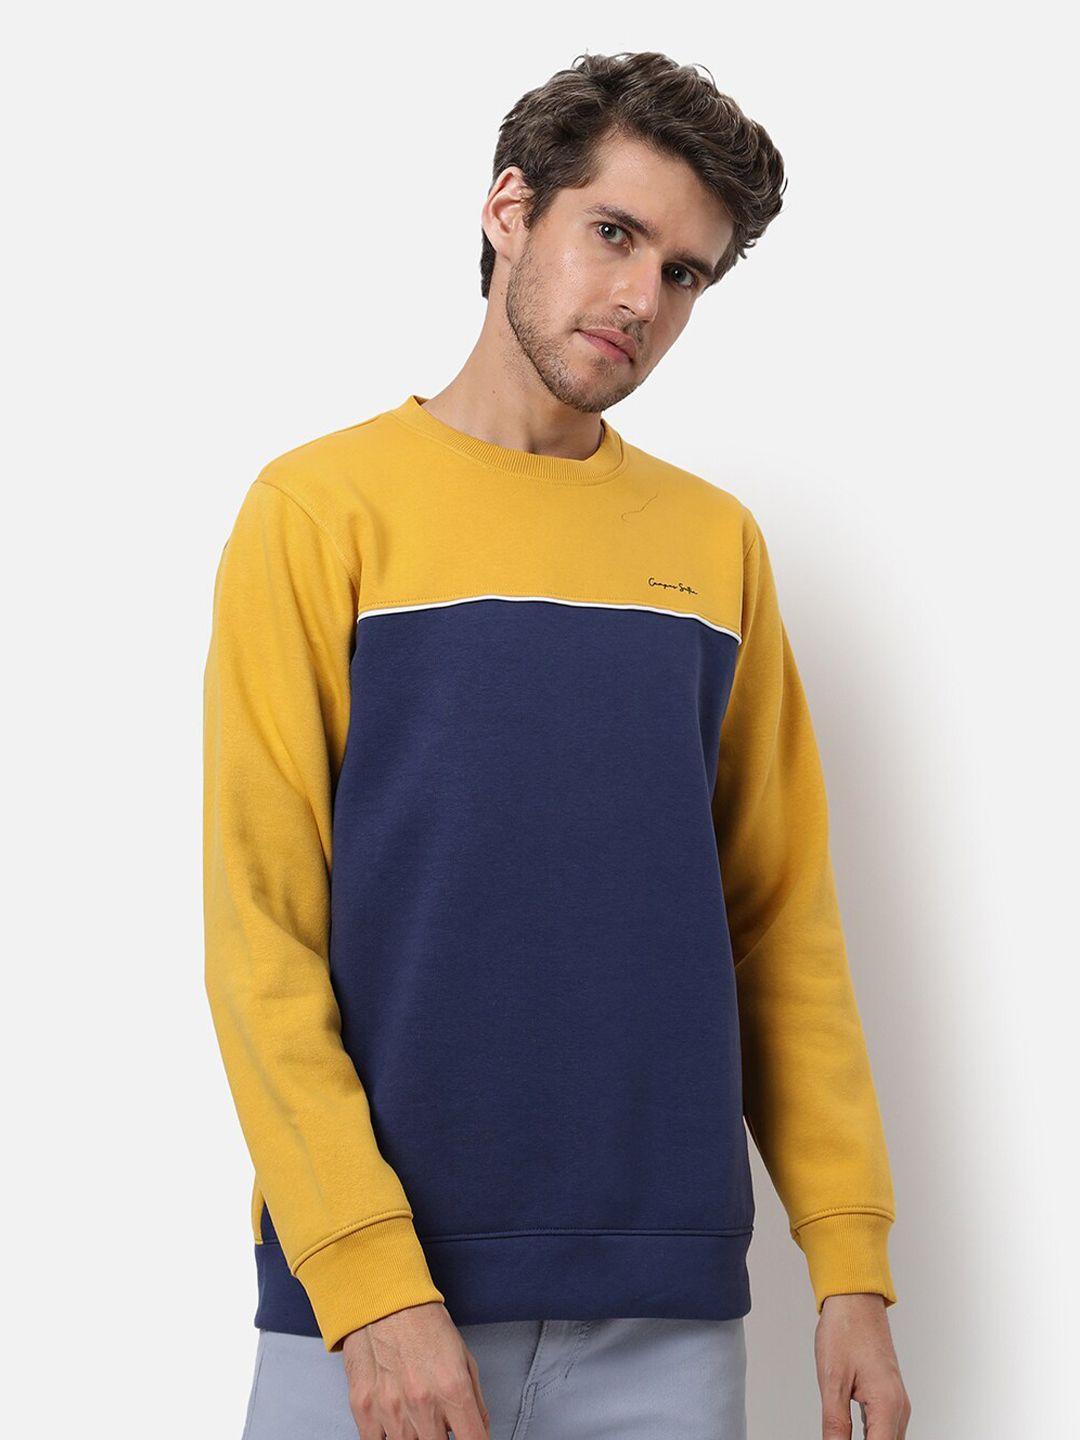 campus-sutra-men-yellow-&-blue-colourblocked-pullover